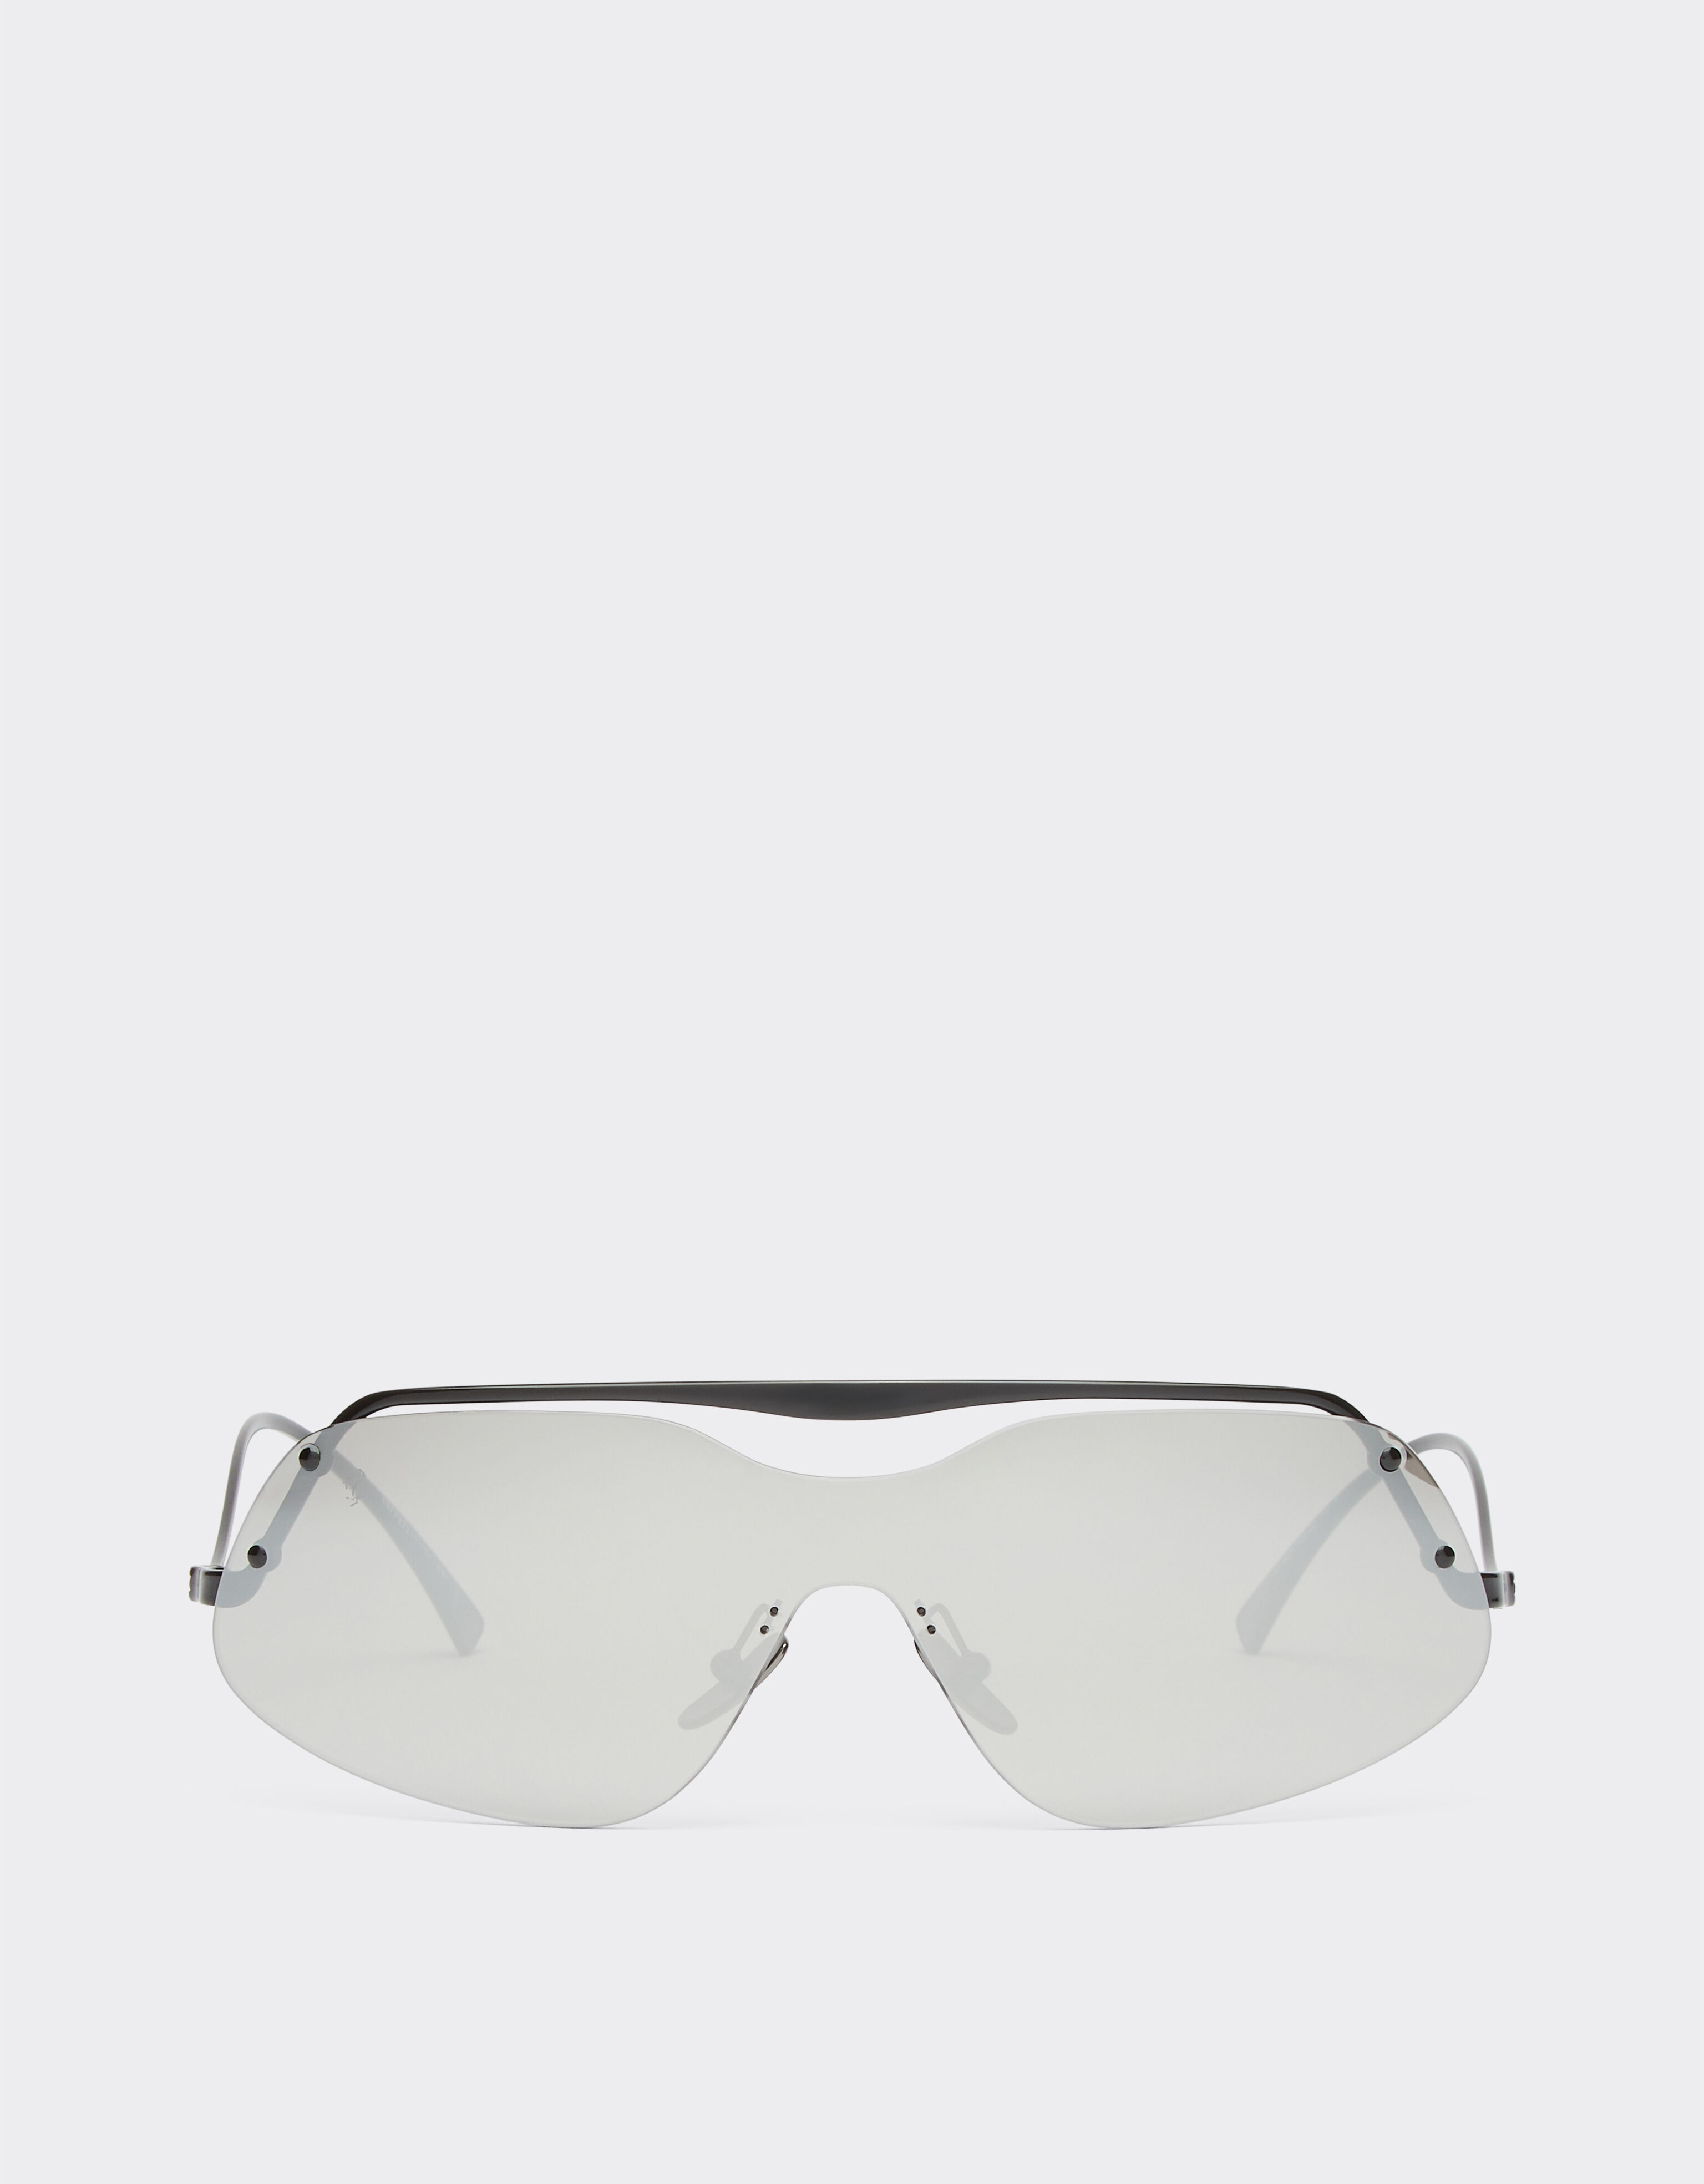 ${brand} Ferrari sunglasses in black metal with mirror lenses ${colorDescription} ${masterID}